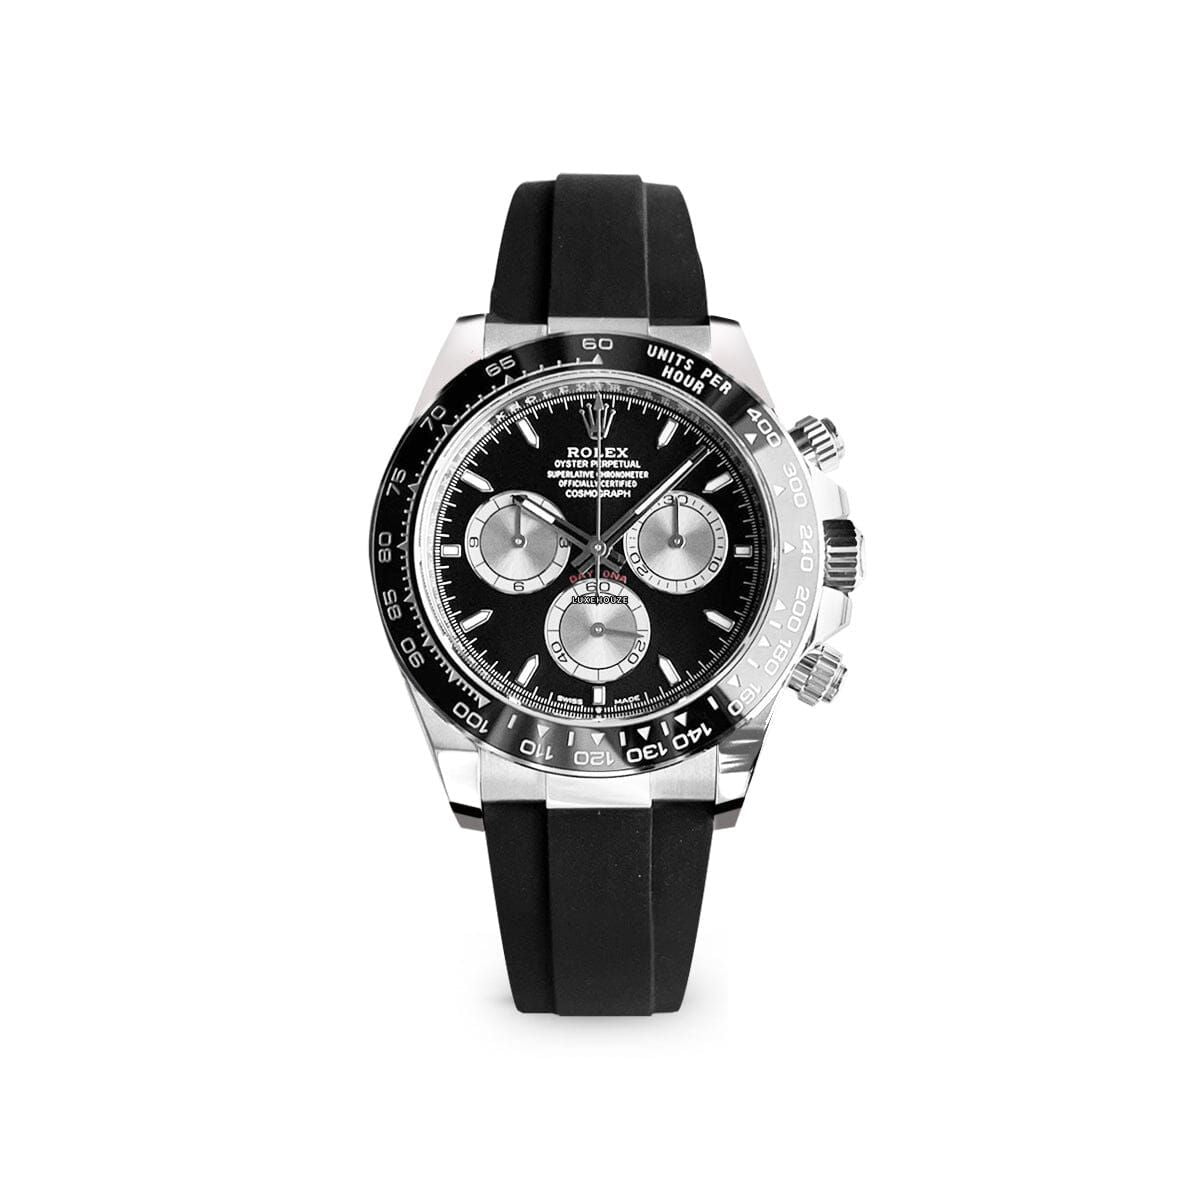 Daytona 126519LN Black Watches Rolex 